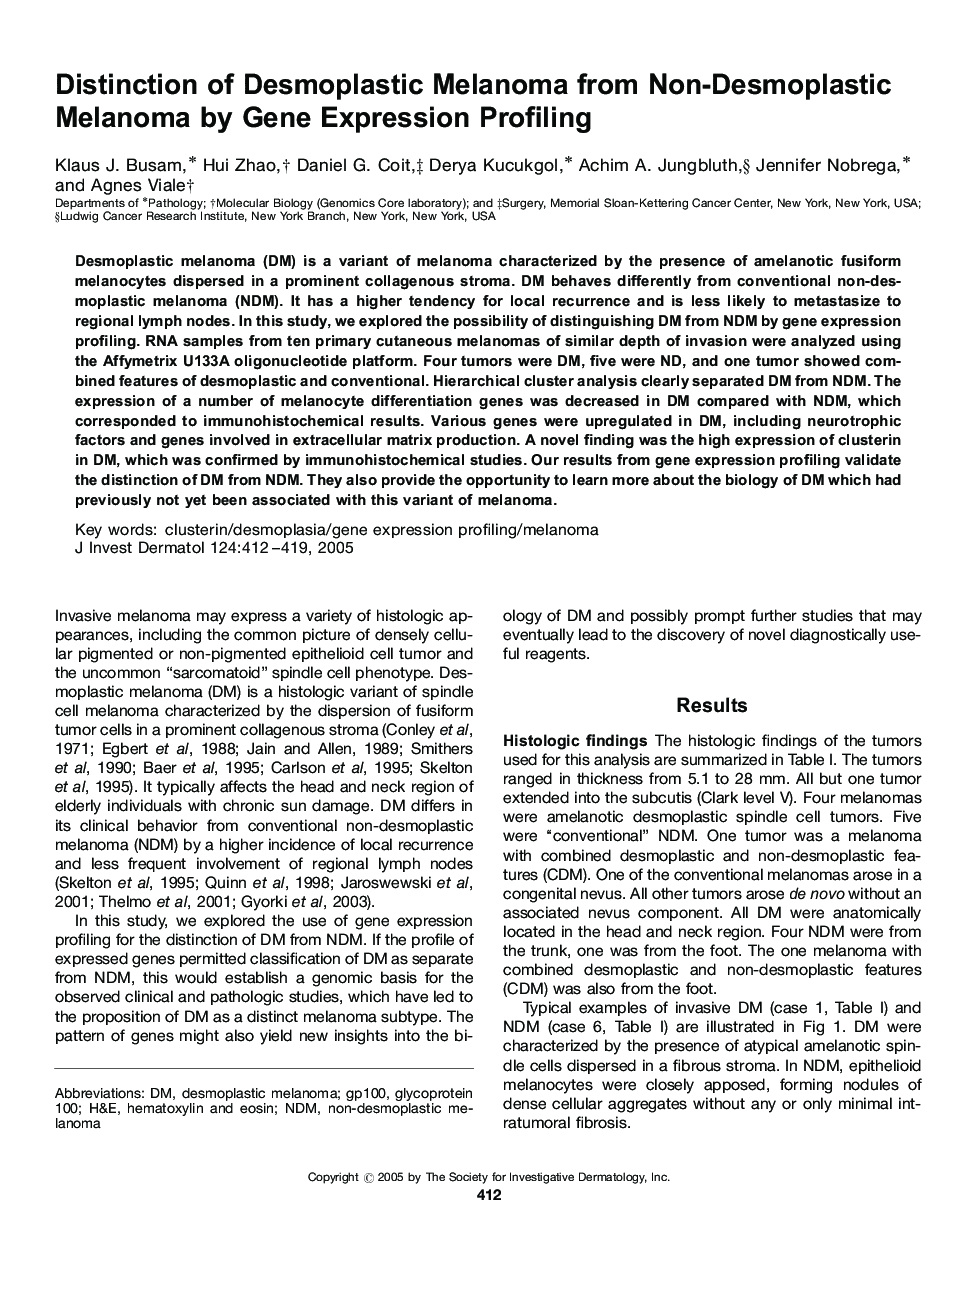 Distinction of Desmoplastic Melanoma from Non-Desmoplastic Melanoma by Gene Expression Profiling